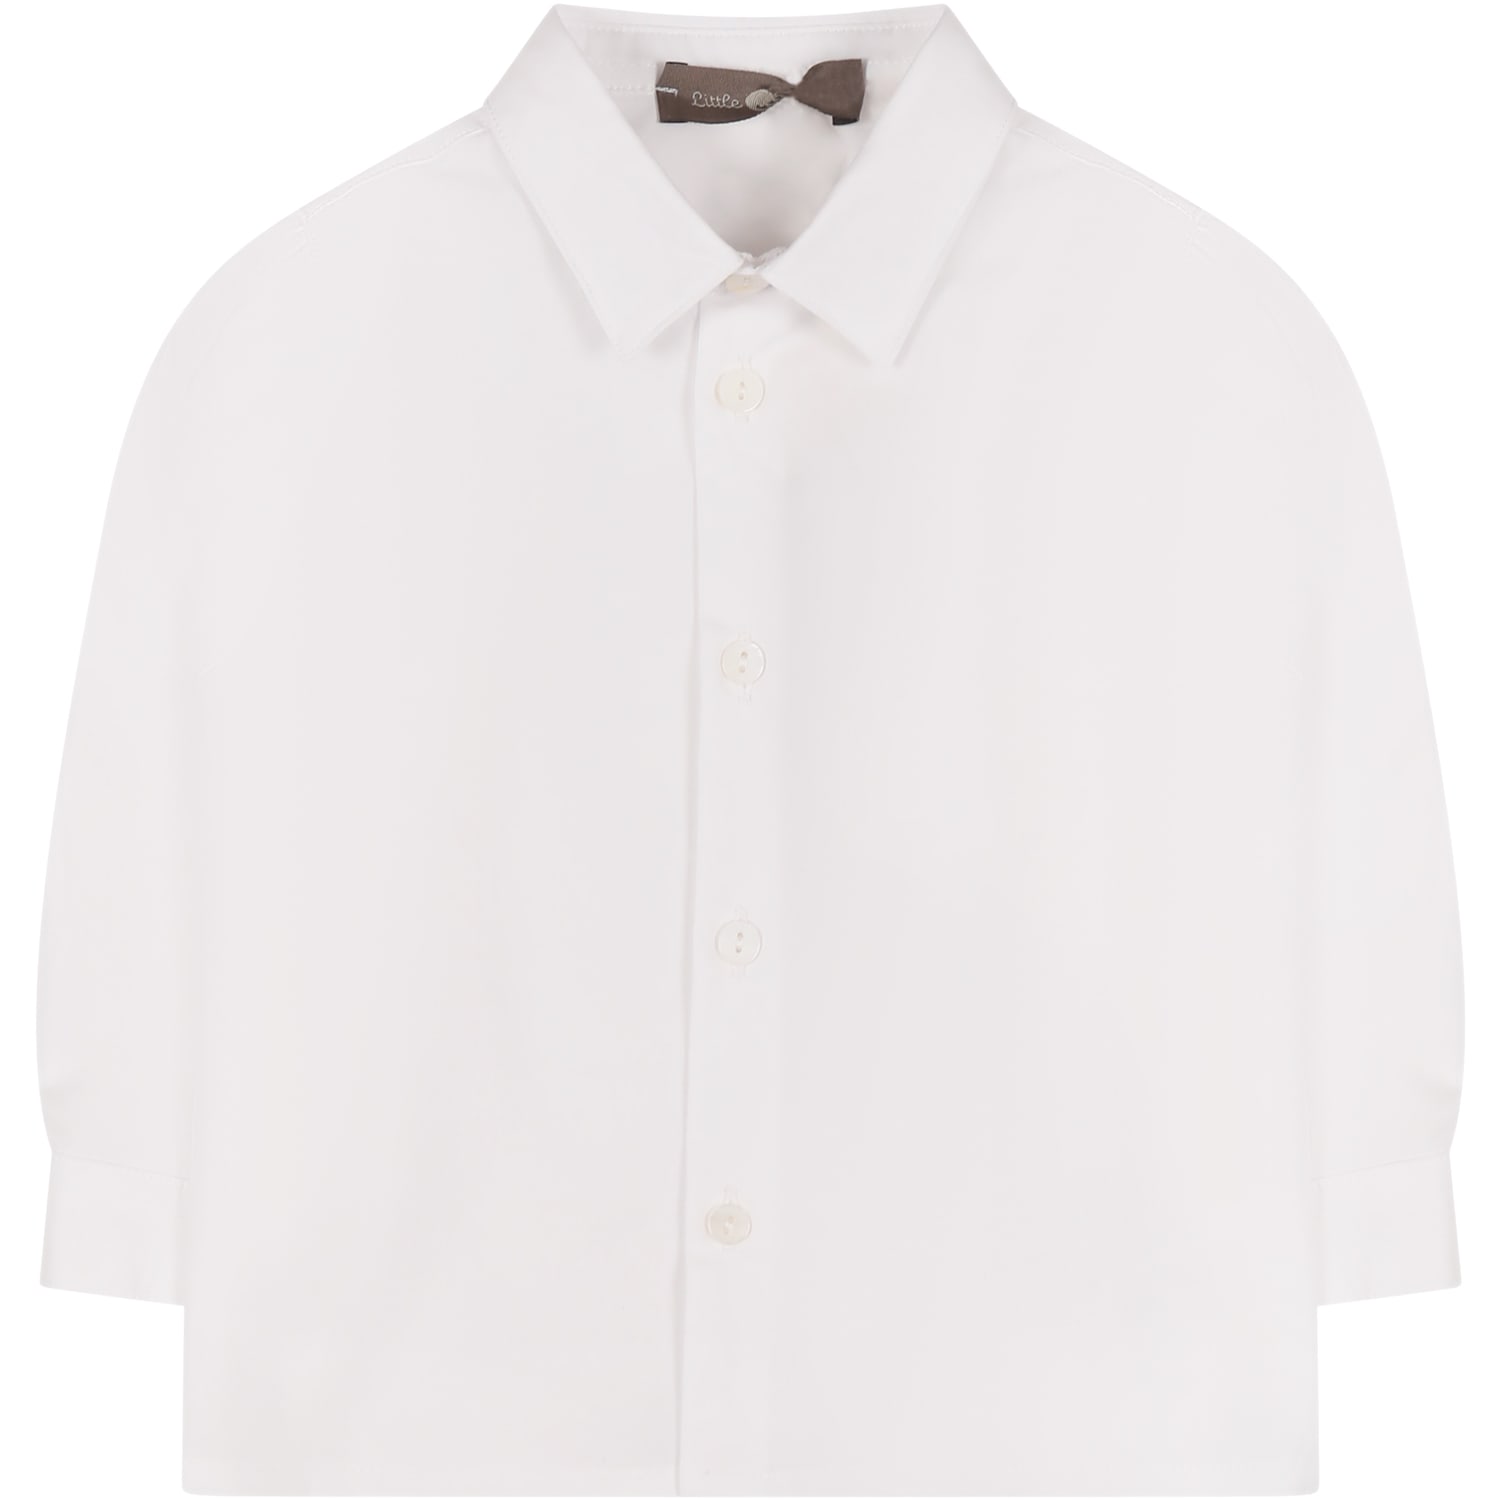 Shop Little Bear White Shirt For Baby Boy